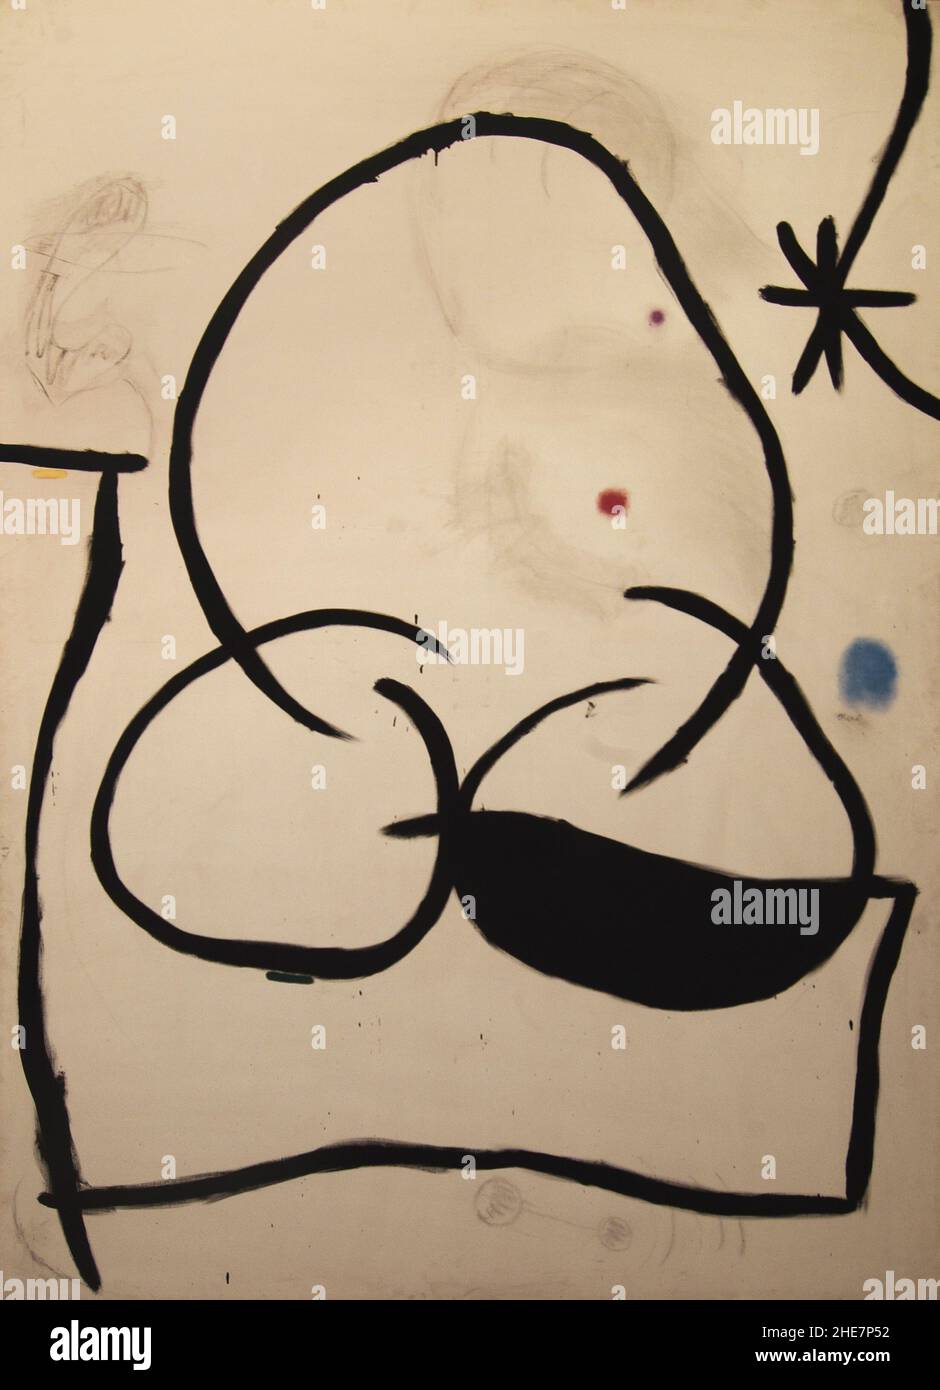 Museo Miró, Pilar i Joan Miró-Stiftung, Frau in der Nacht, Femme dans la nuit, Öl und Kreide auf Leinwand, 265,5 x 185,5, Palma di Maiorca, Maiorca Foto Stock